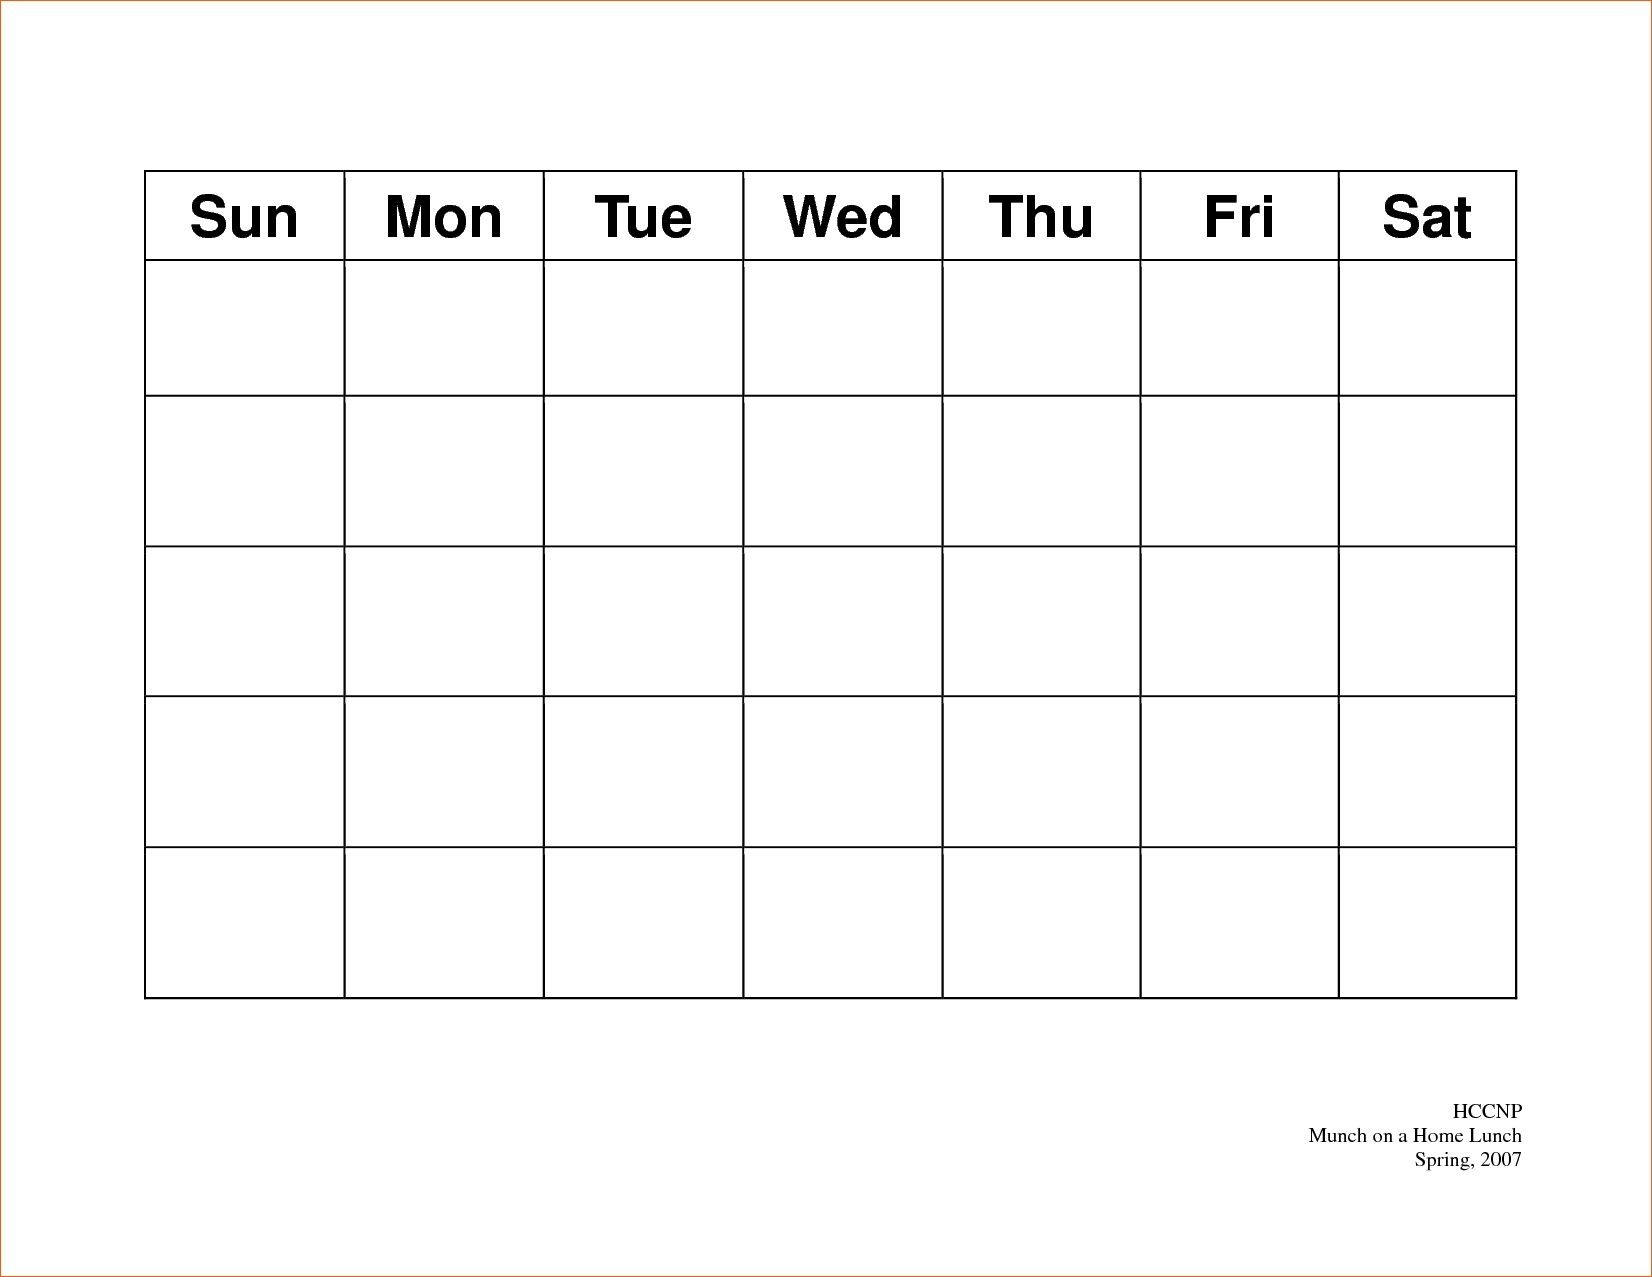 Free Printable Calendar 5 Day Week Calendar Printables Free Templates